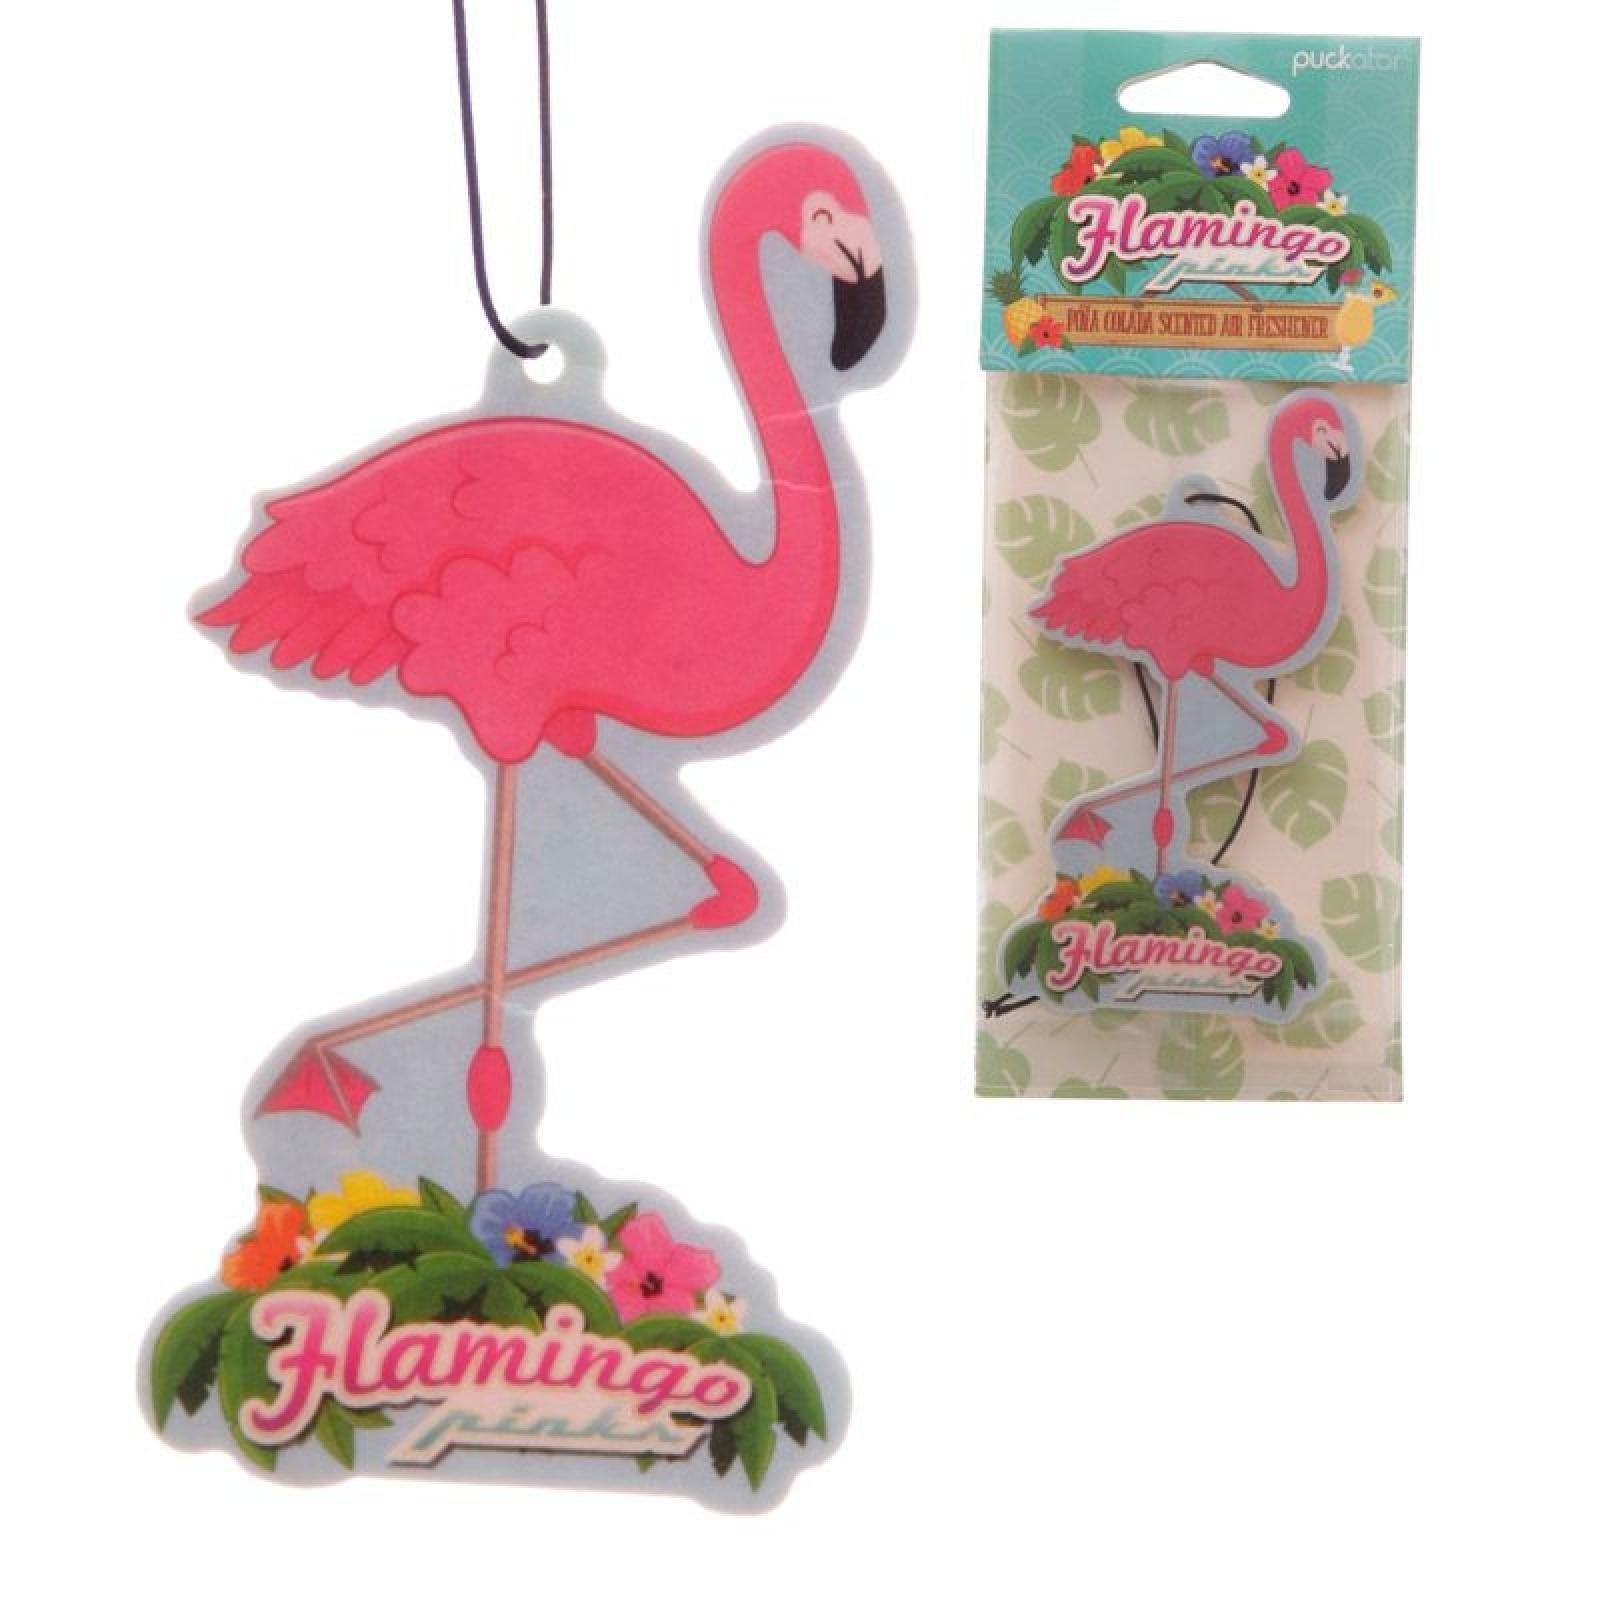 Eau Flamingo (pro Puckator Fraiche Pina - Colada Stück) Auto-Lufterfrischer